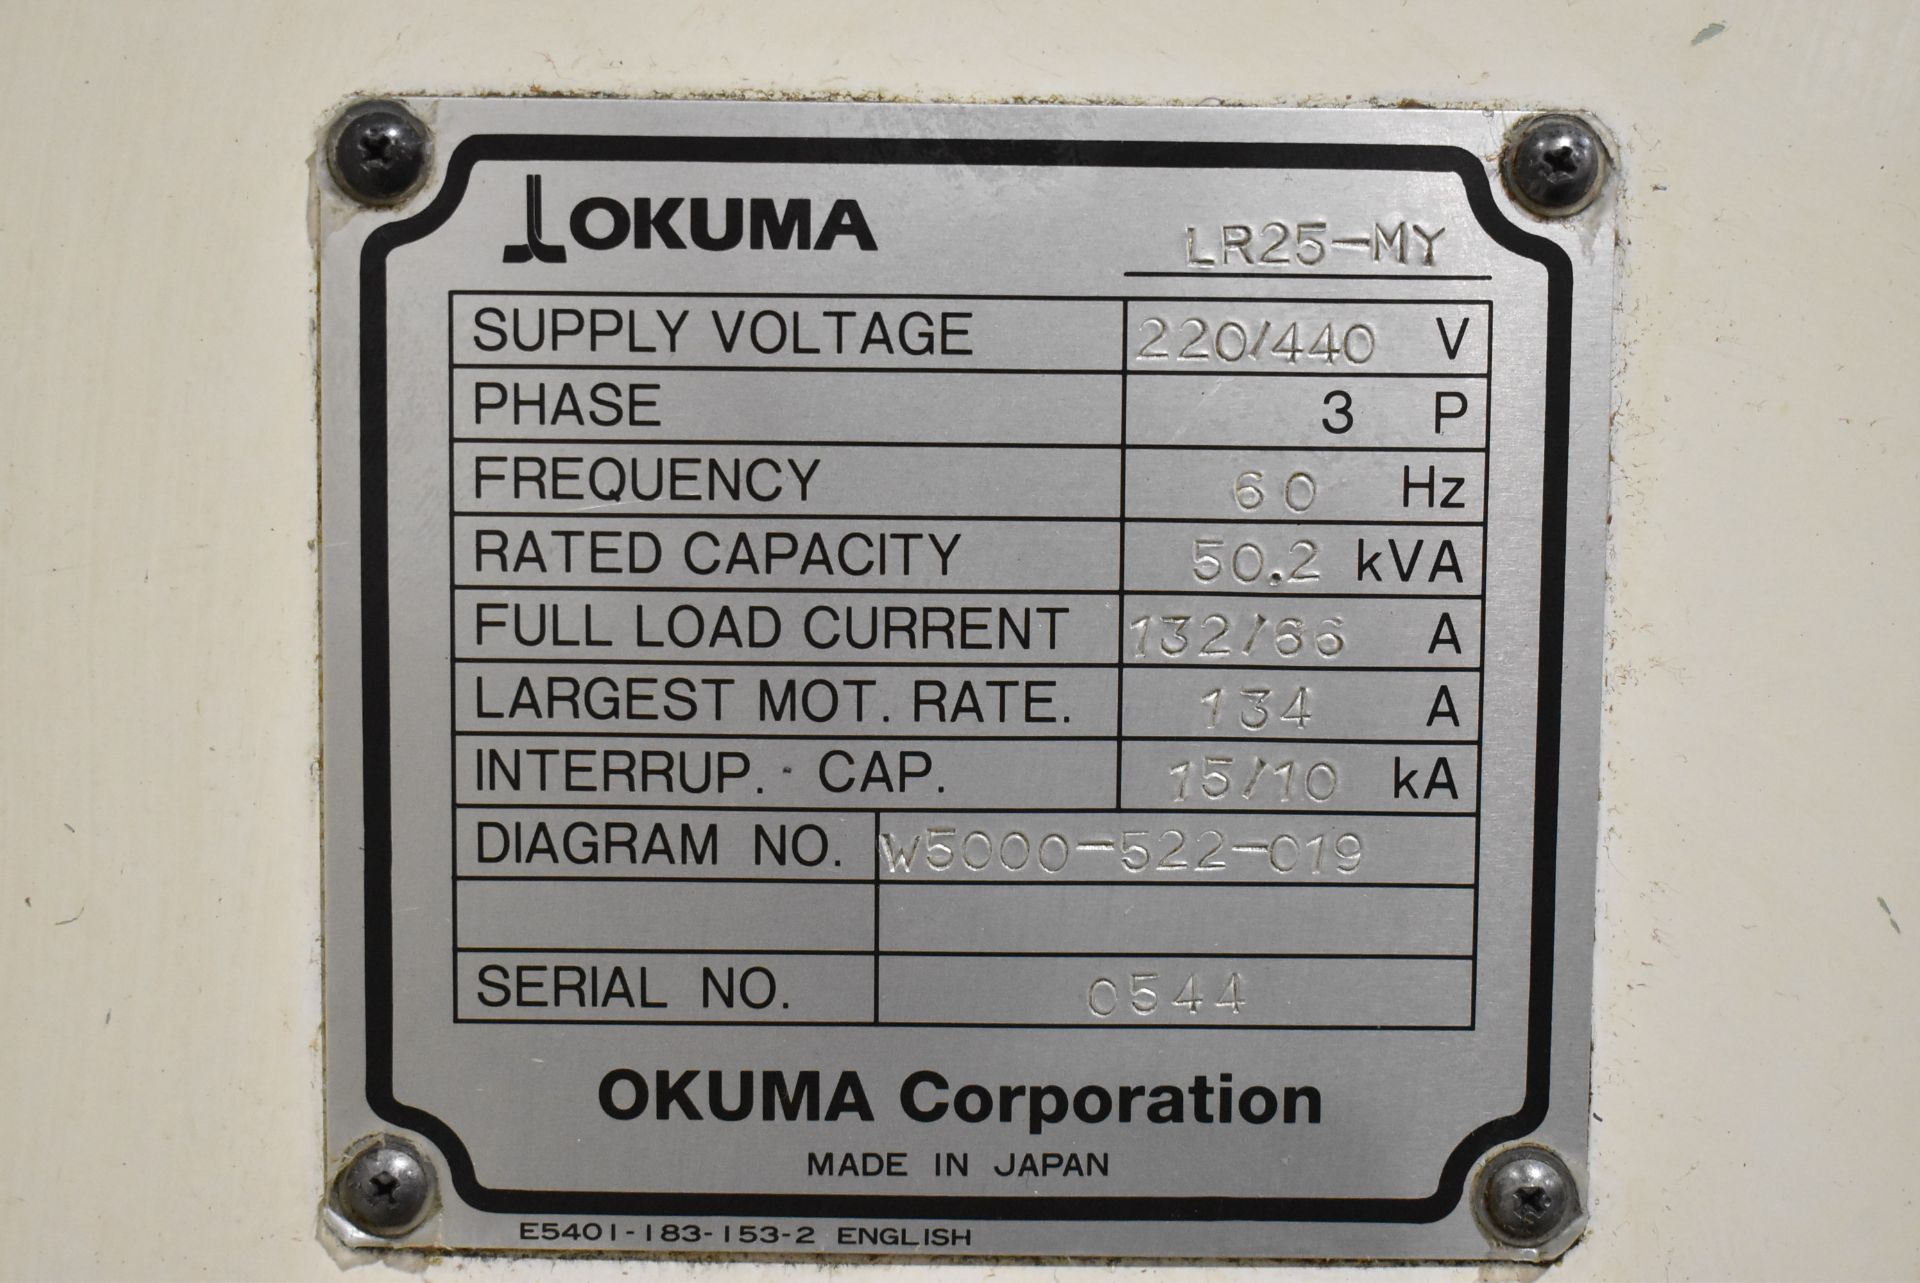 OKUMA LR25-MY TWIN TURRET CNC TURNING & LIVE MILLING CENTER WITH OKUMA CNC CONTROL, COLLET CHUCK, - Image 12 of 12